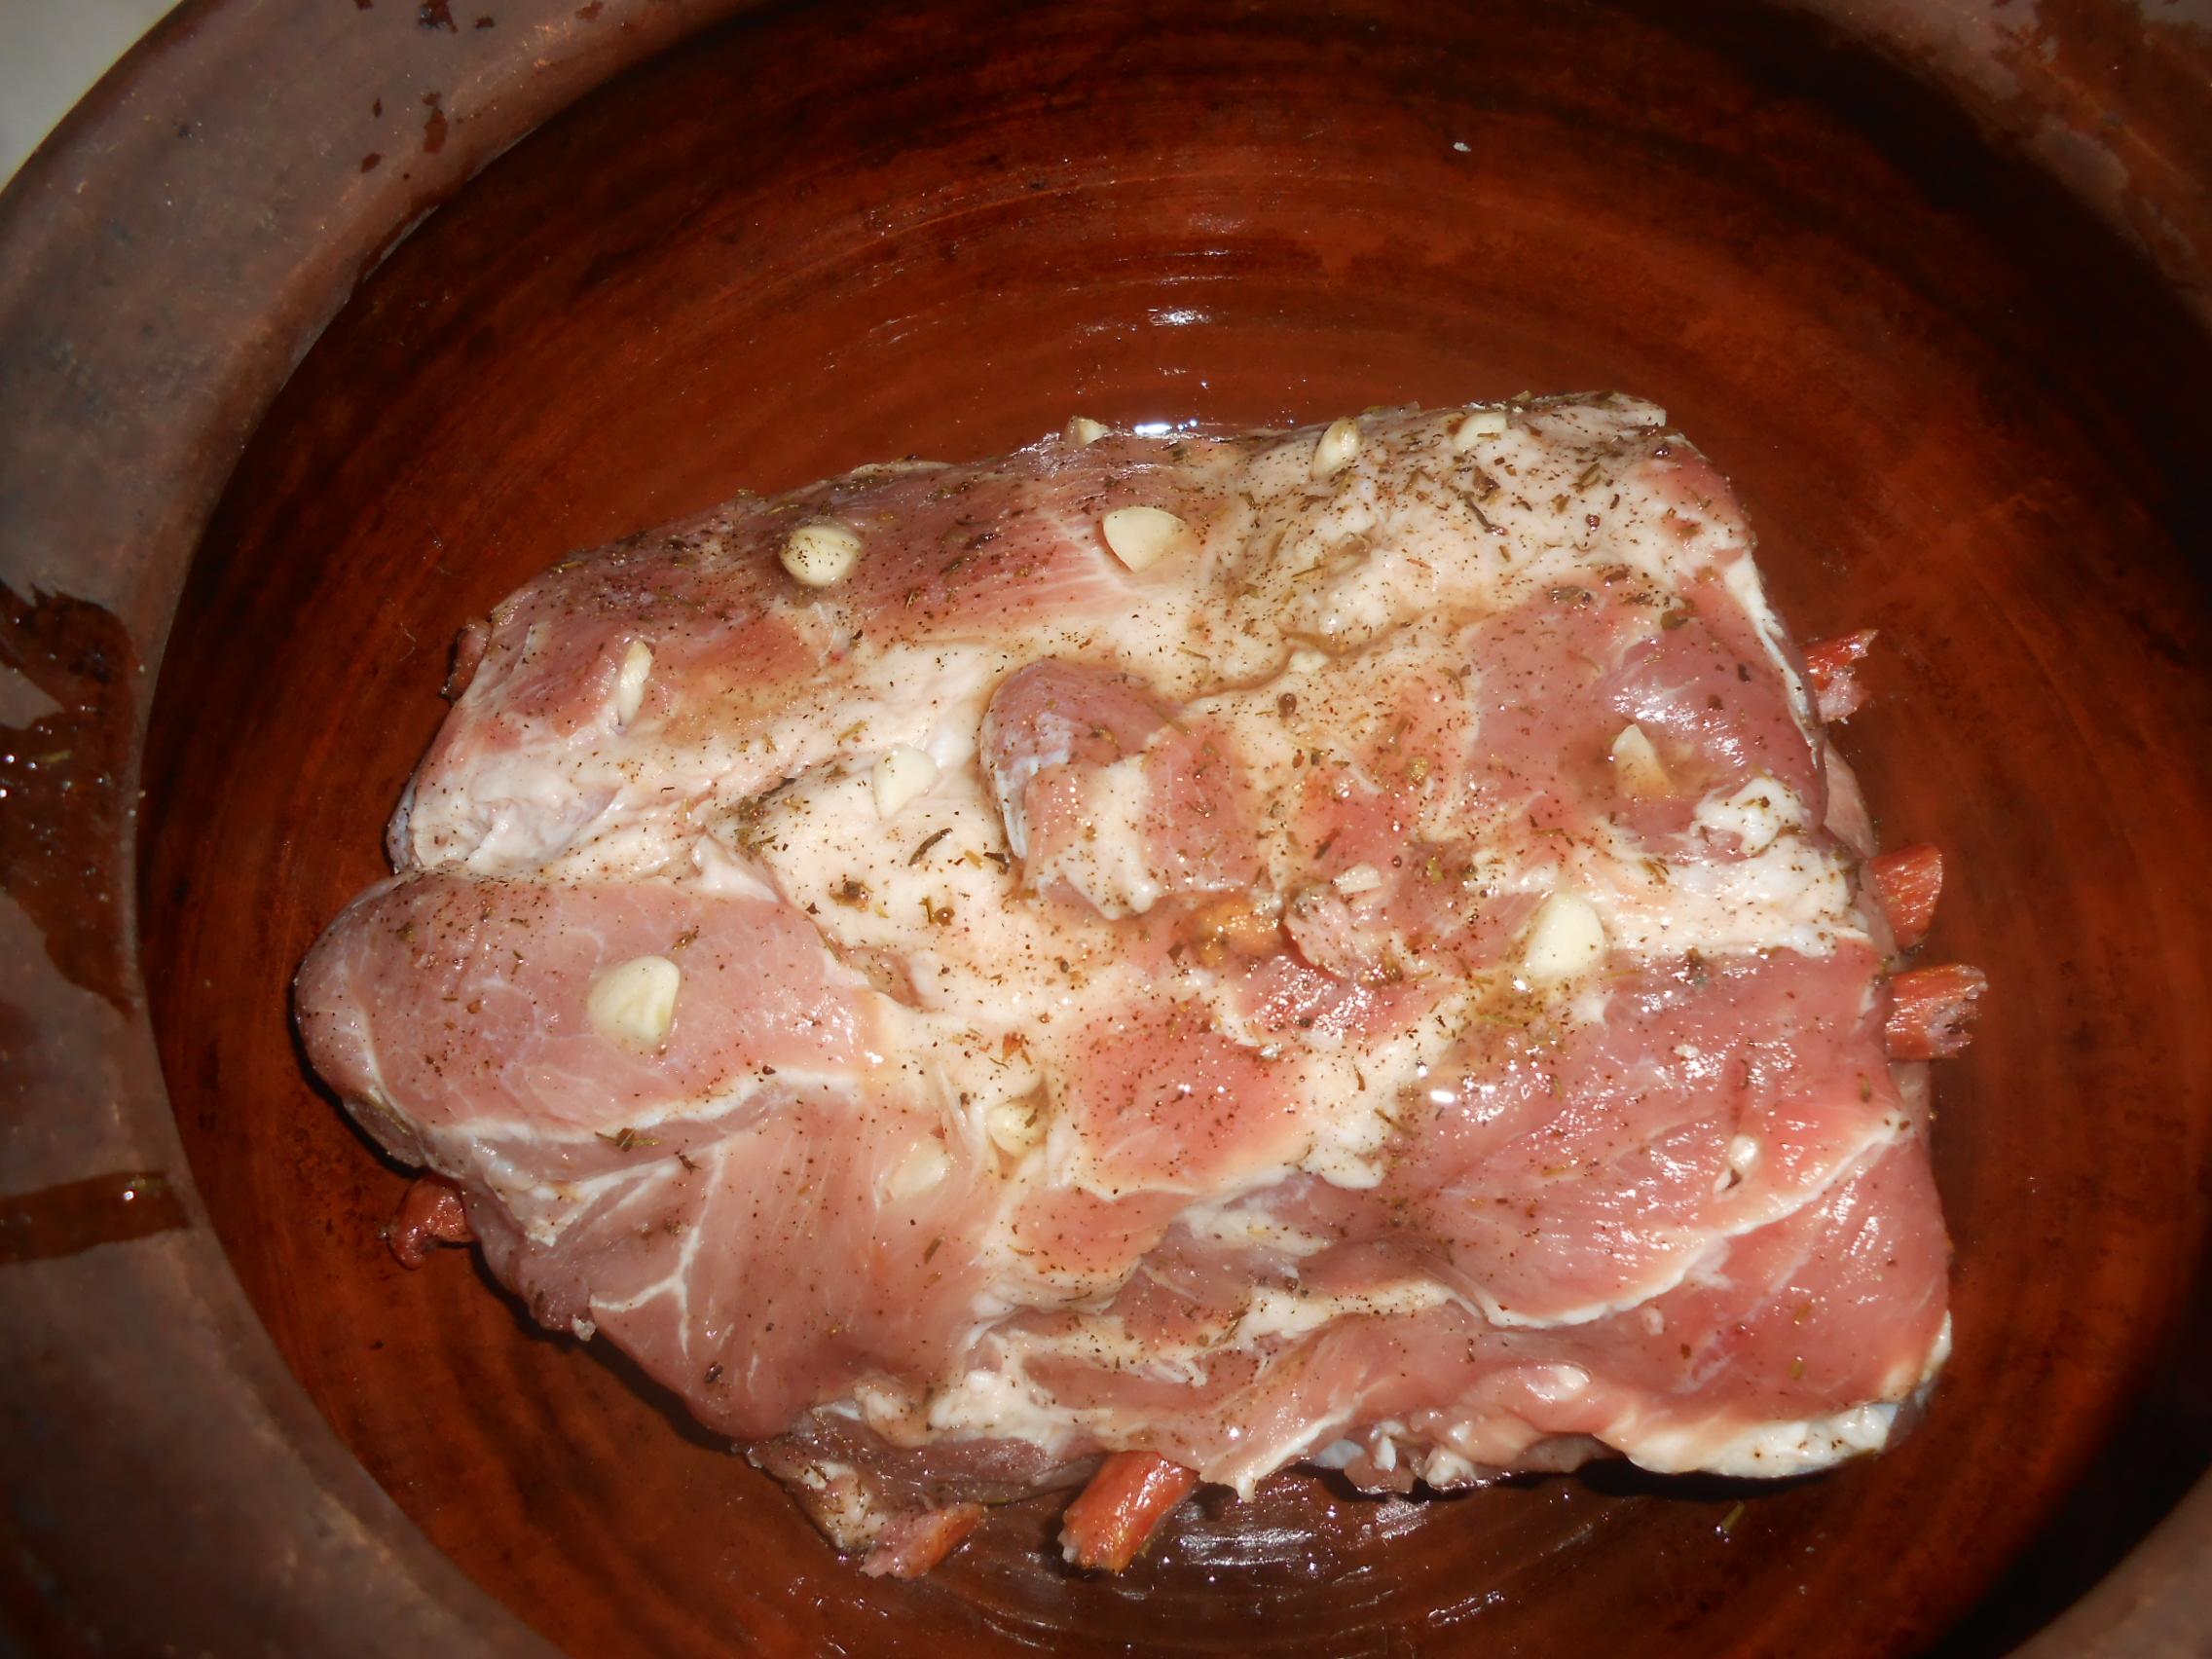 Ceafa de porc impanata coapta-n oala de lut